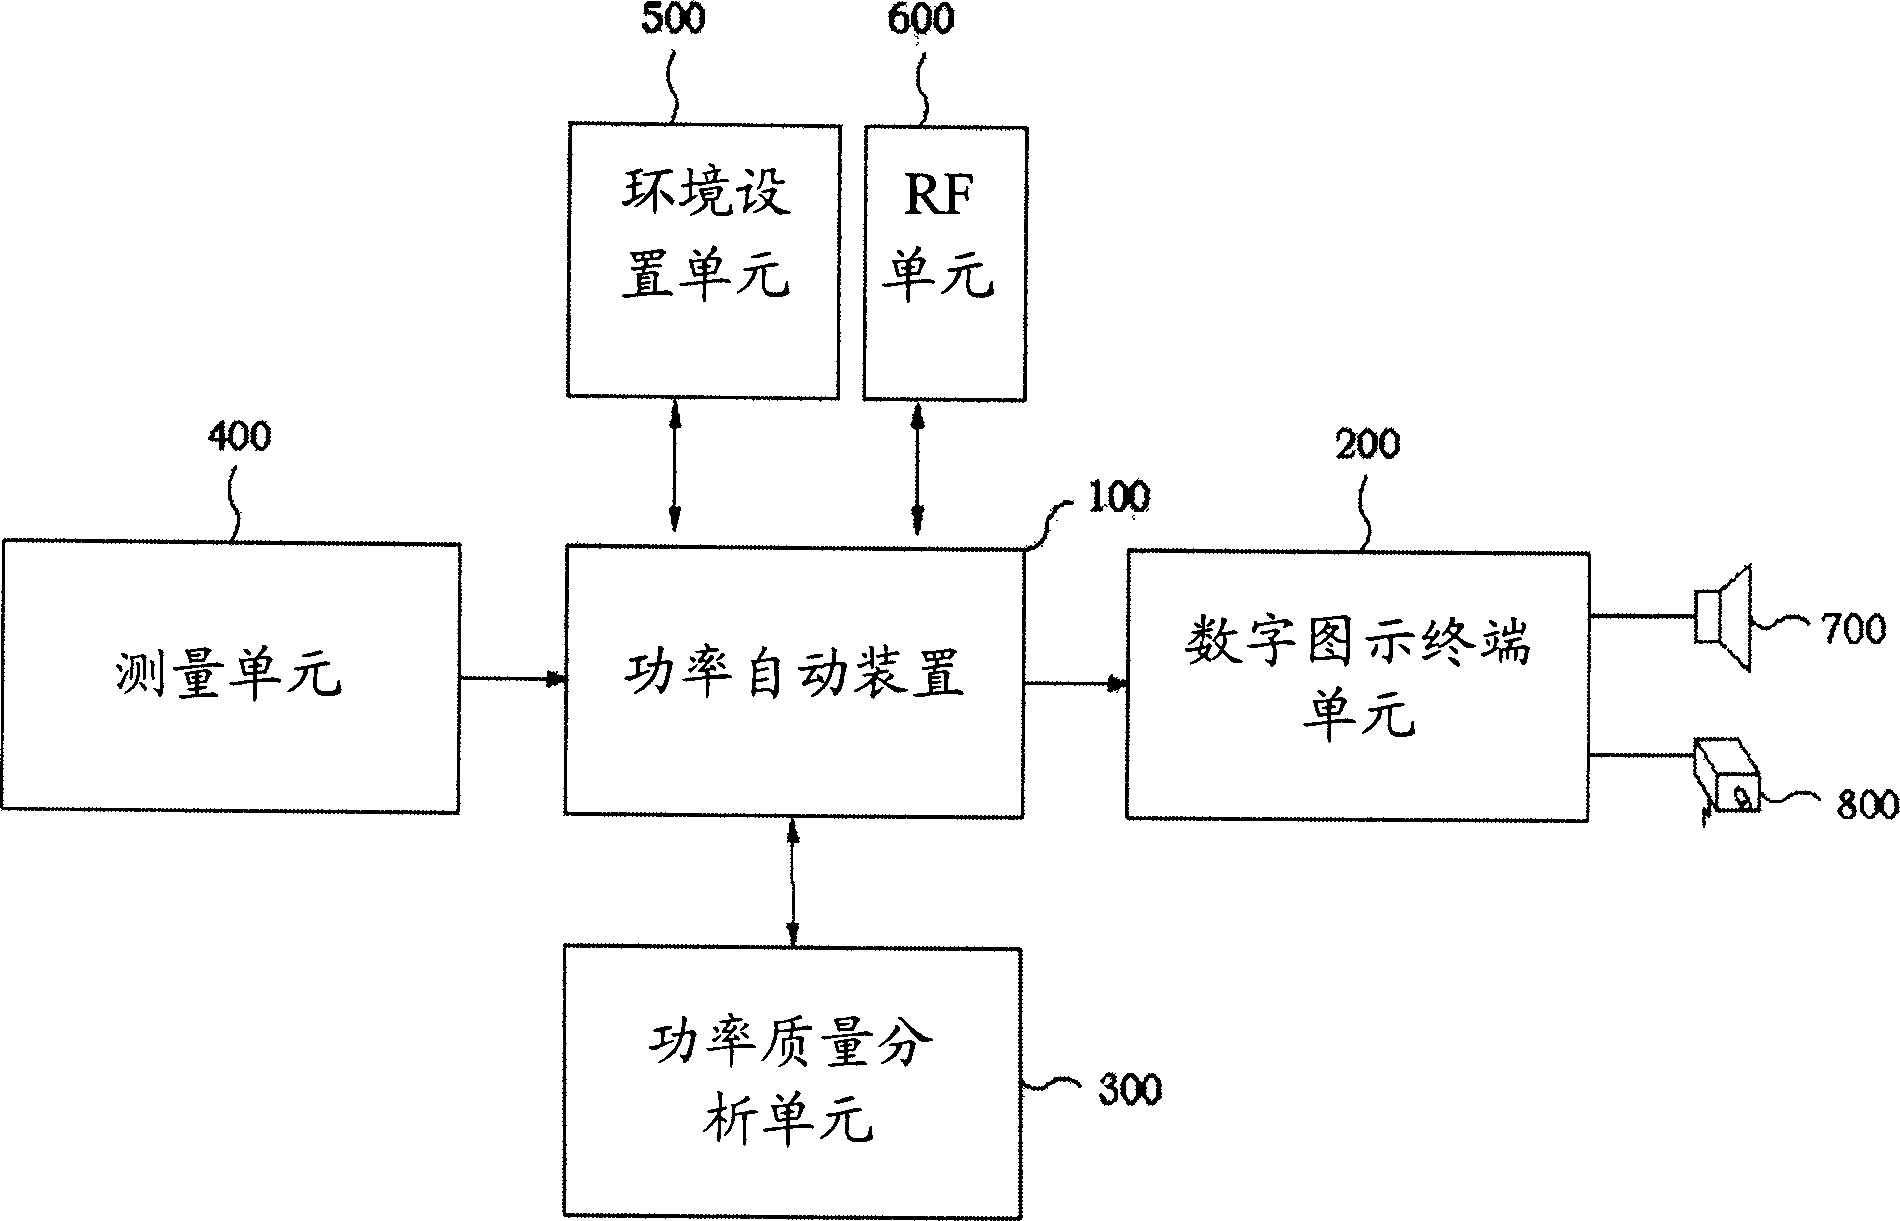 Digital diagrammatic view switch apparatus system